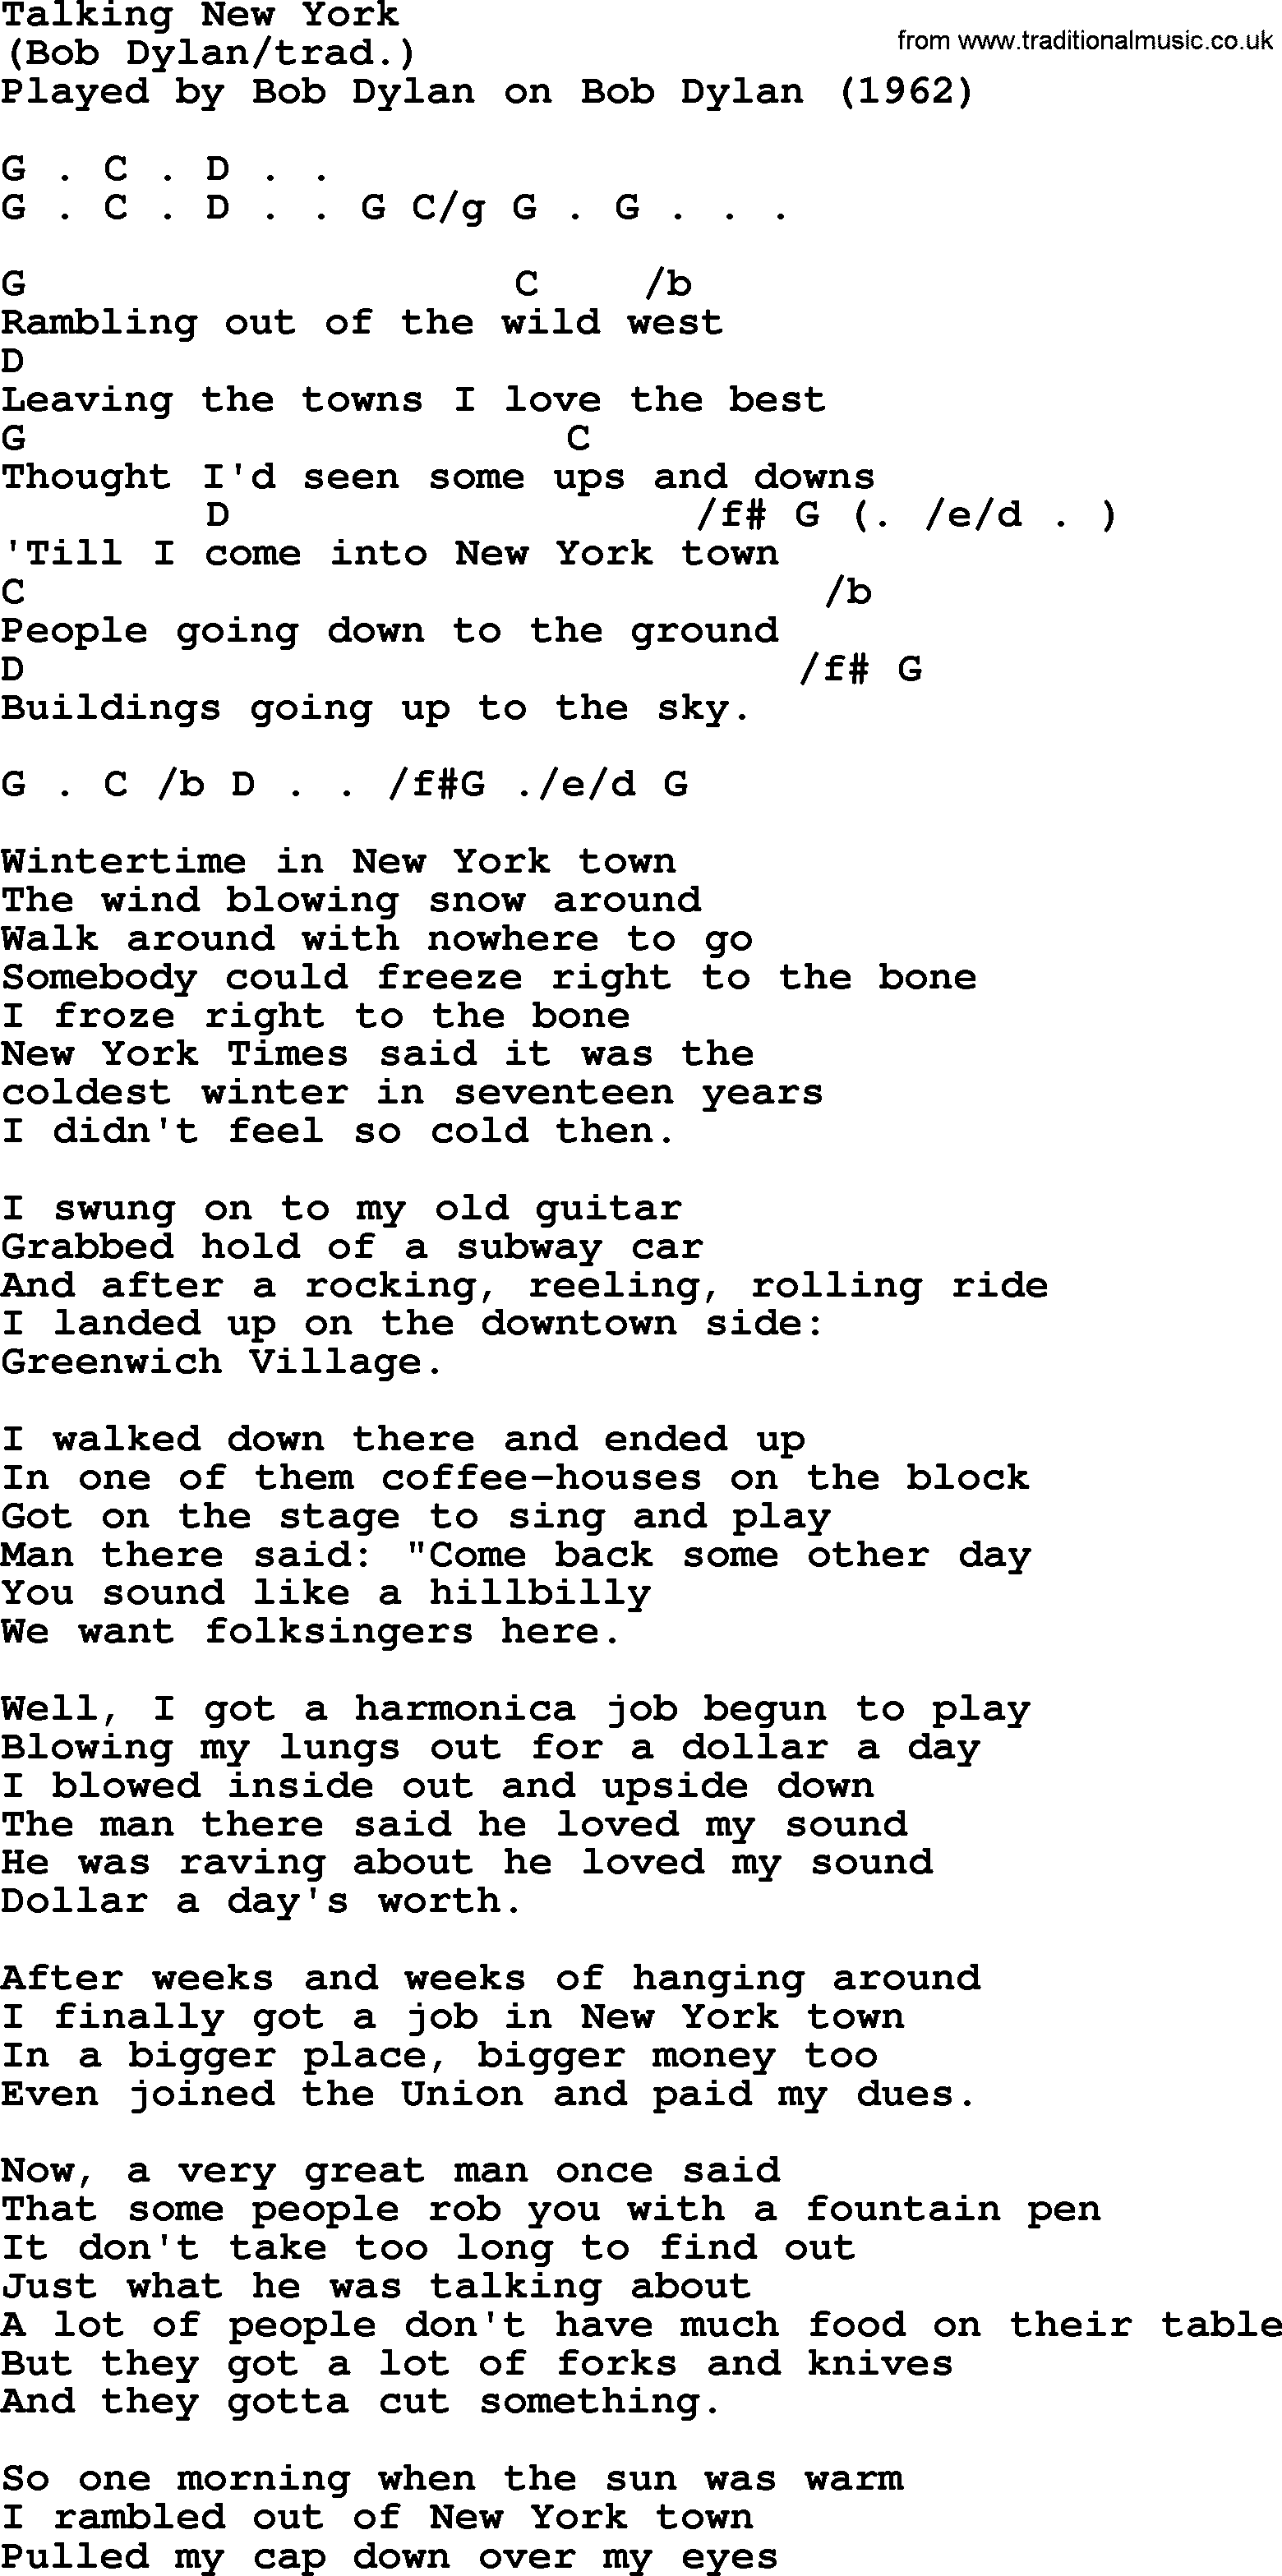 Bob Dylan song, lyrics with chords - Talking New York